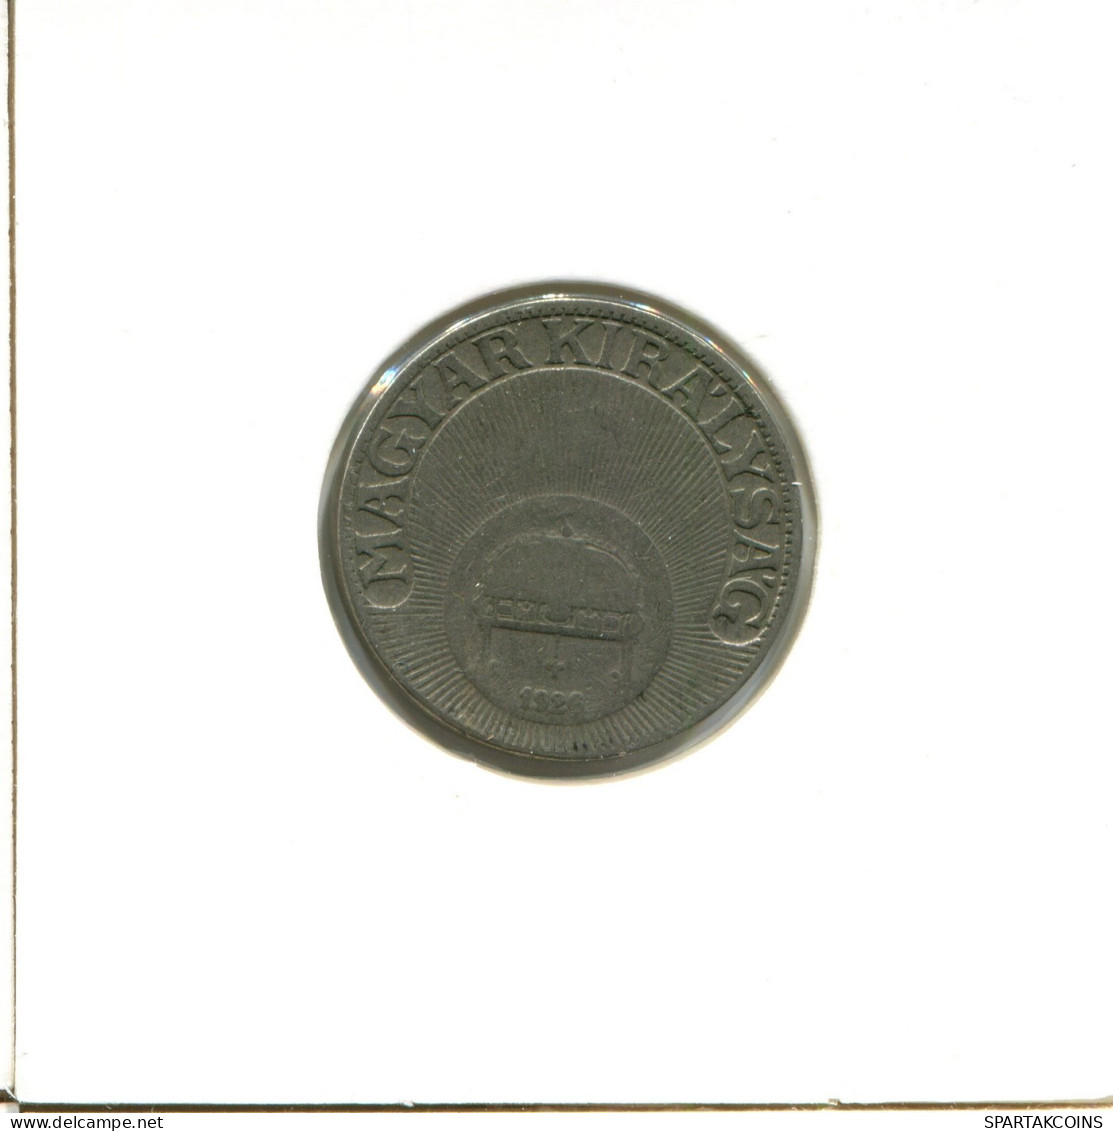 20 FILLER 1926 HUNGRÍA HUNGARY Moneda #AX733.E.A - Hongarije